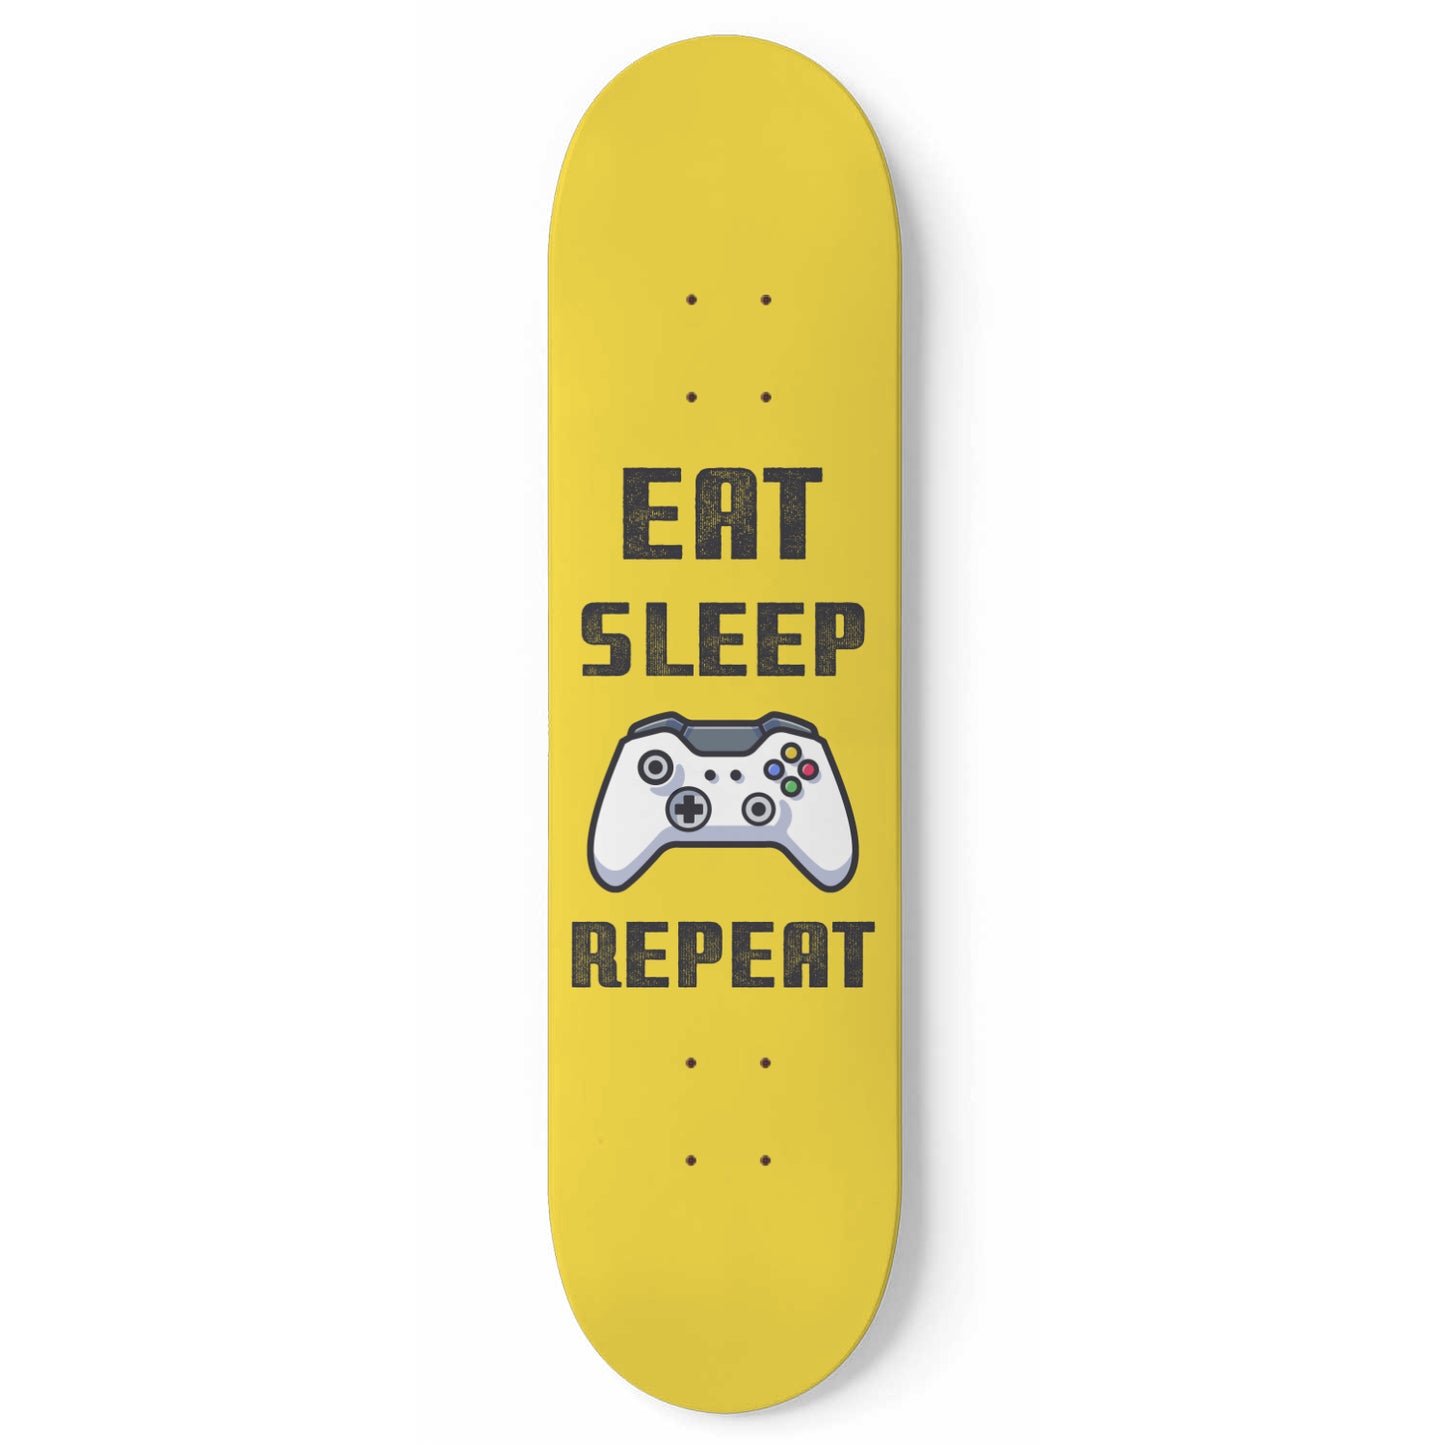 Eat Sleep Game Repeat - Gamer Wall Art Decals - XBox Controller - Yellow Skateboard Wall Art